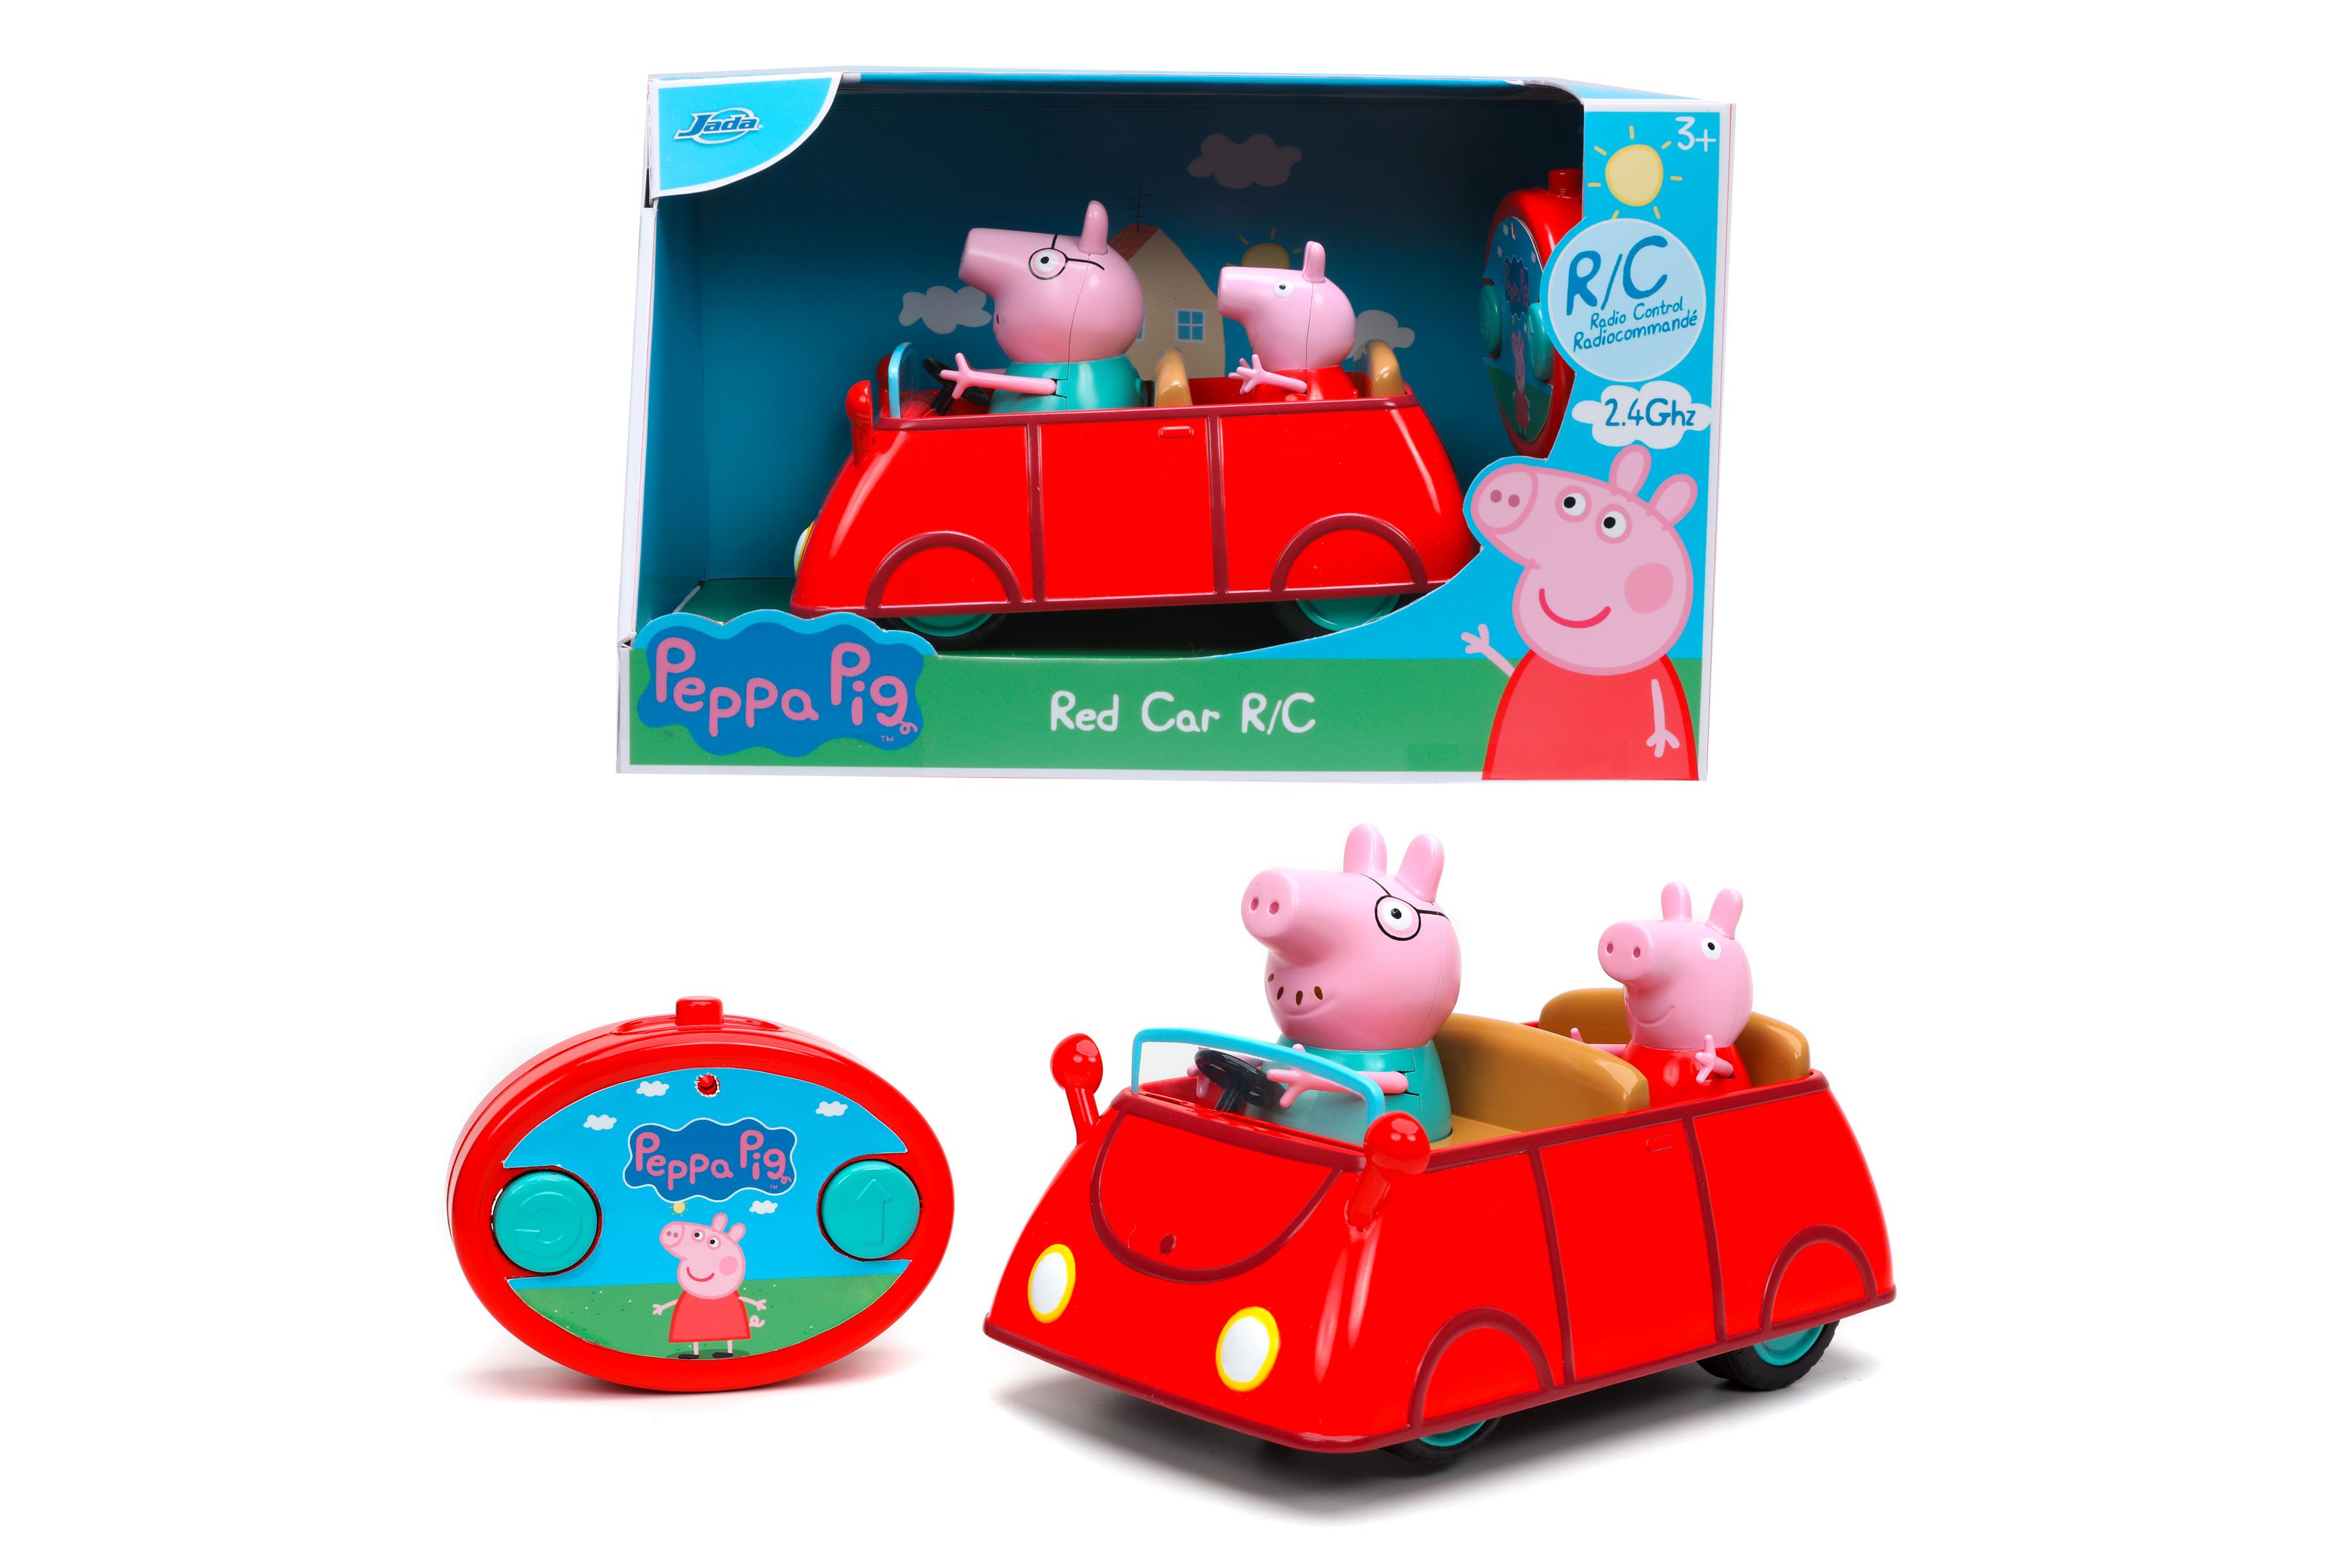 Spielzeugauto Pappa Pig Ab 3 Jahren mit Fernbedienung - Rot/Multicolor, Basics, Kunststoff (13,90/25,40/15,80cm) - Simba